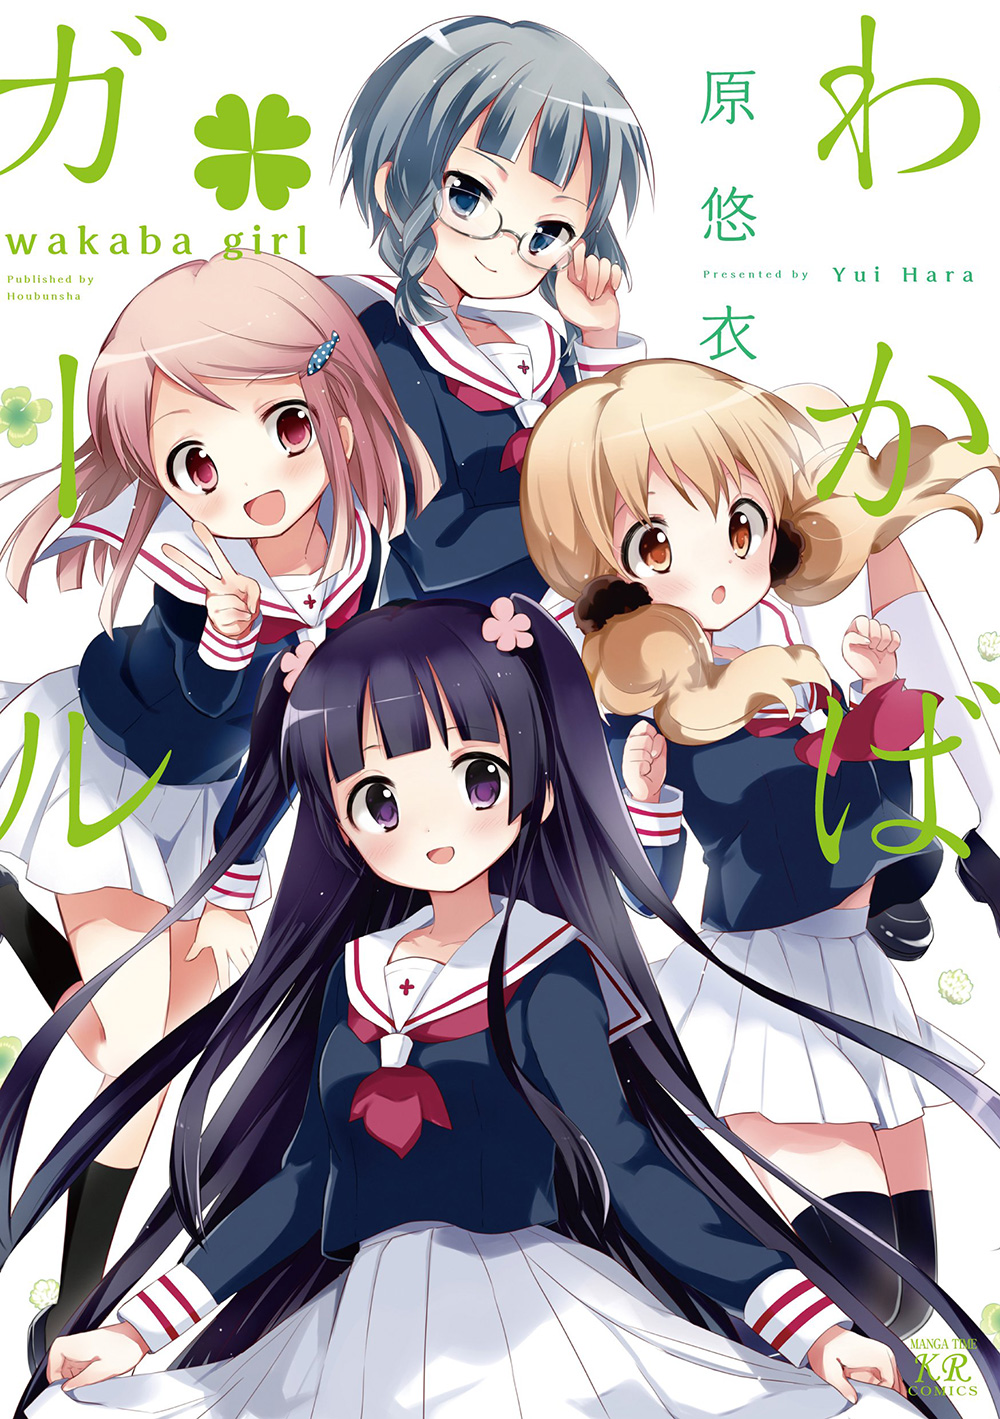 Wakaba-Girl-Manga-Vol-1-Cover